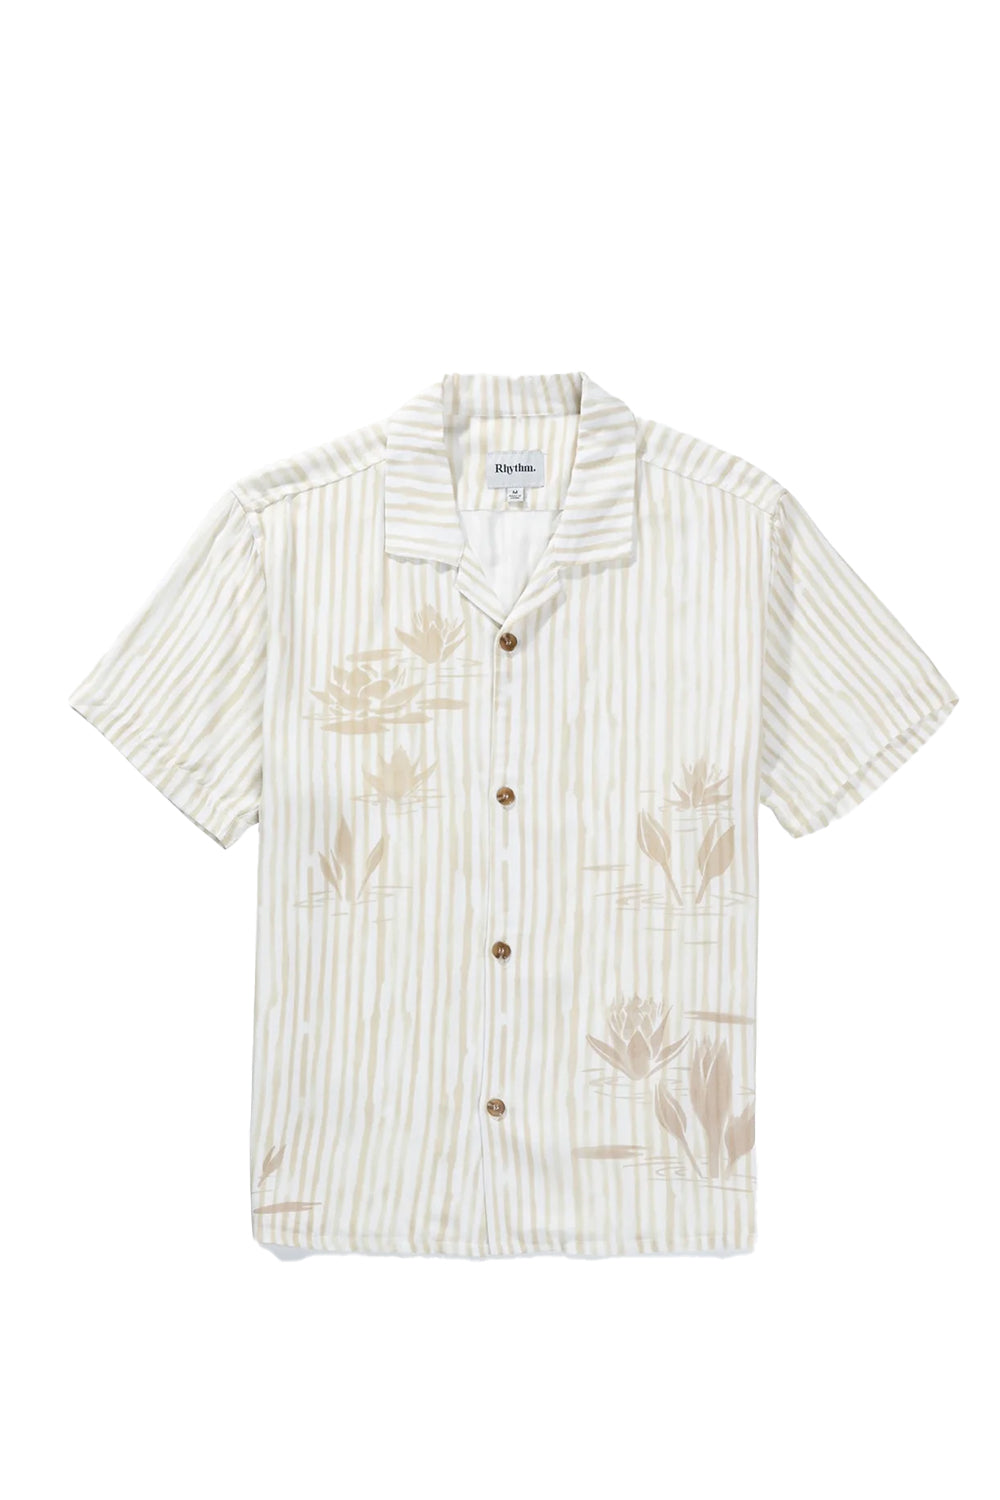 Rhythm Lily Stripe Cuban S/S Shirt